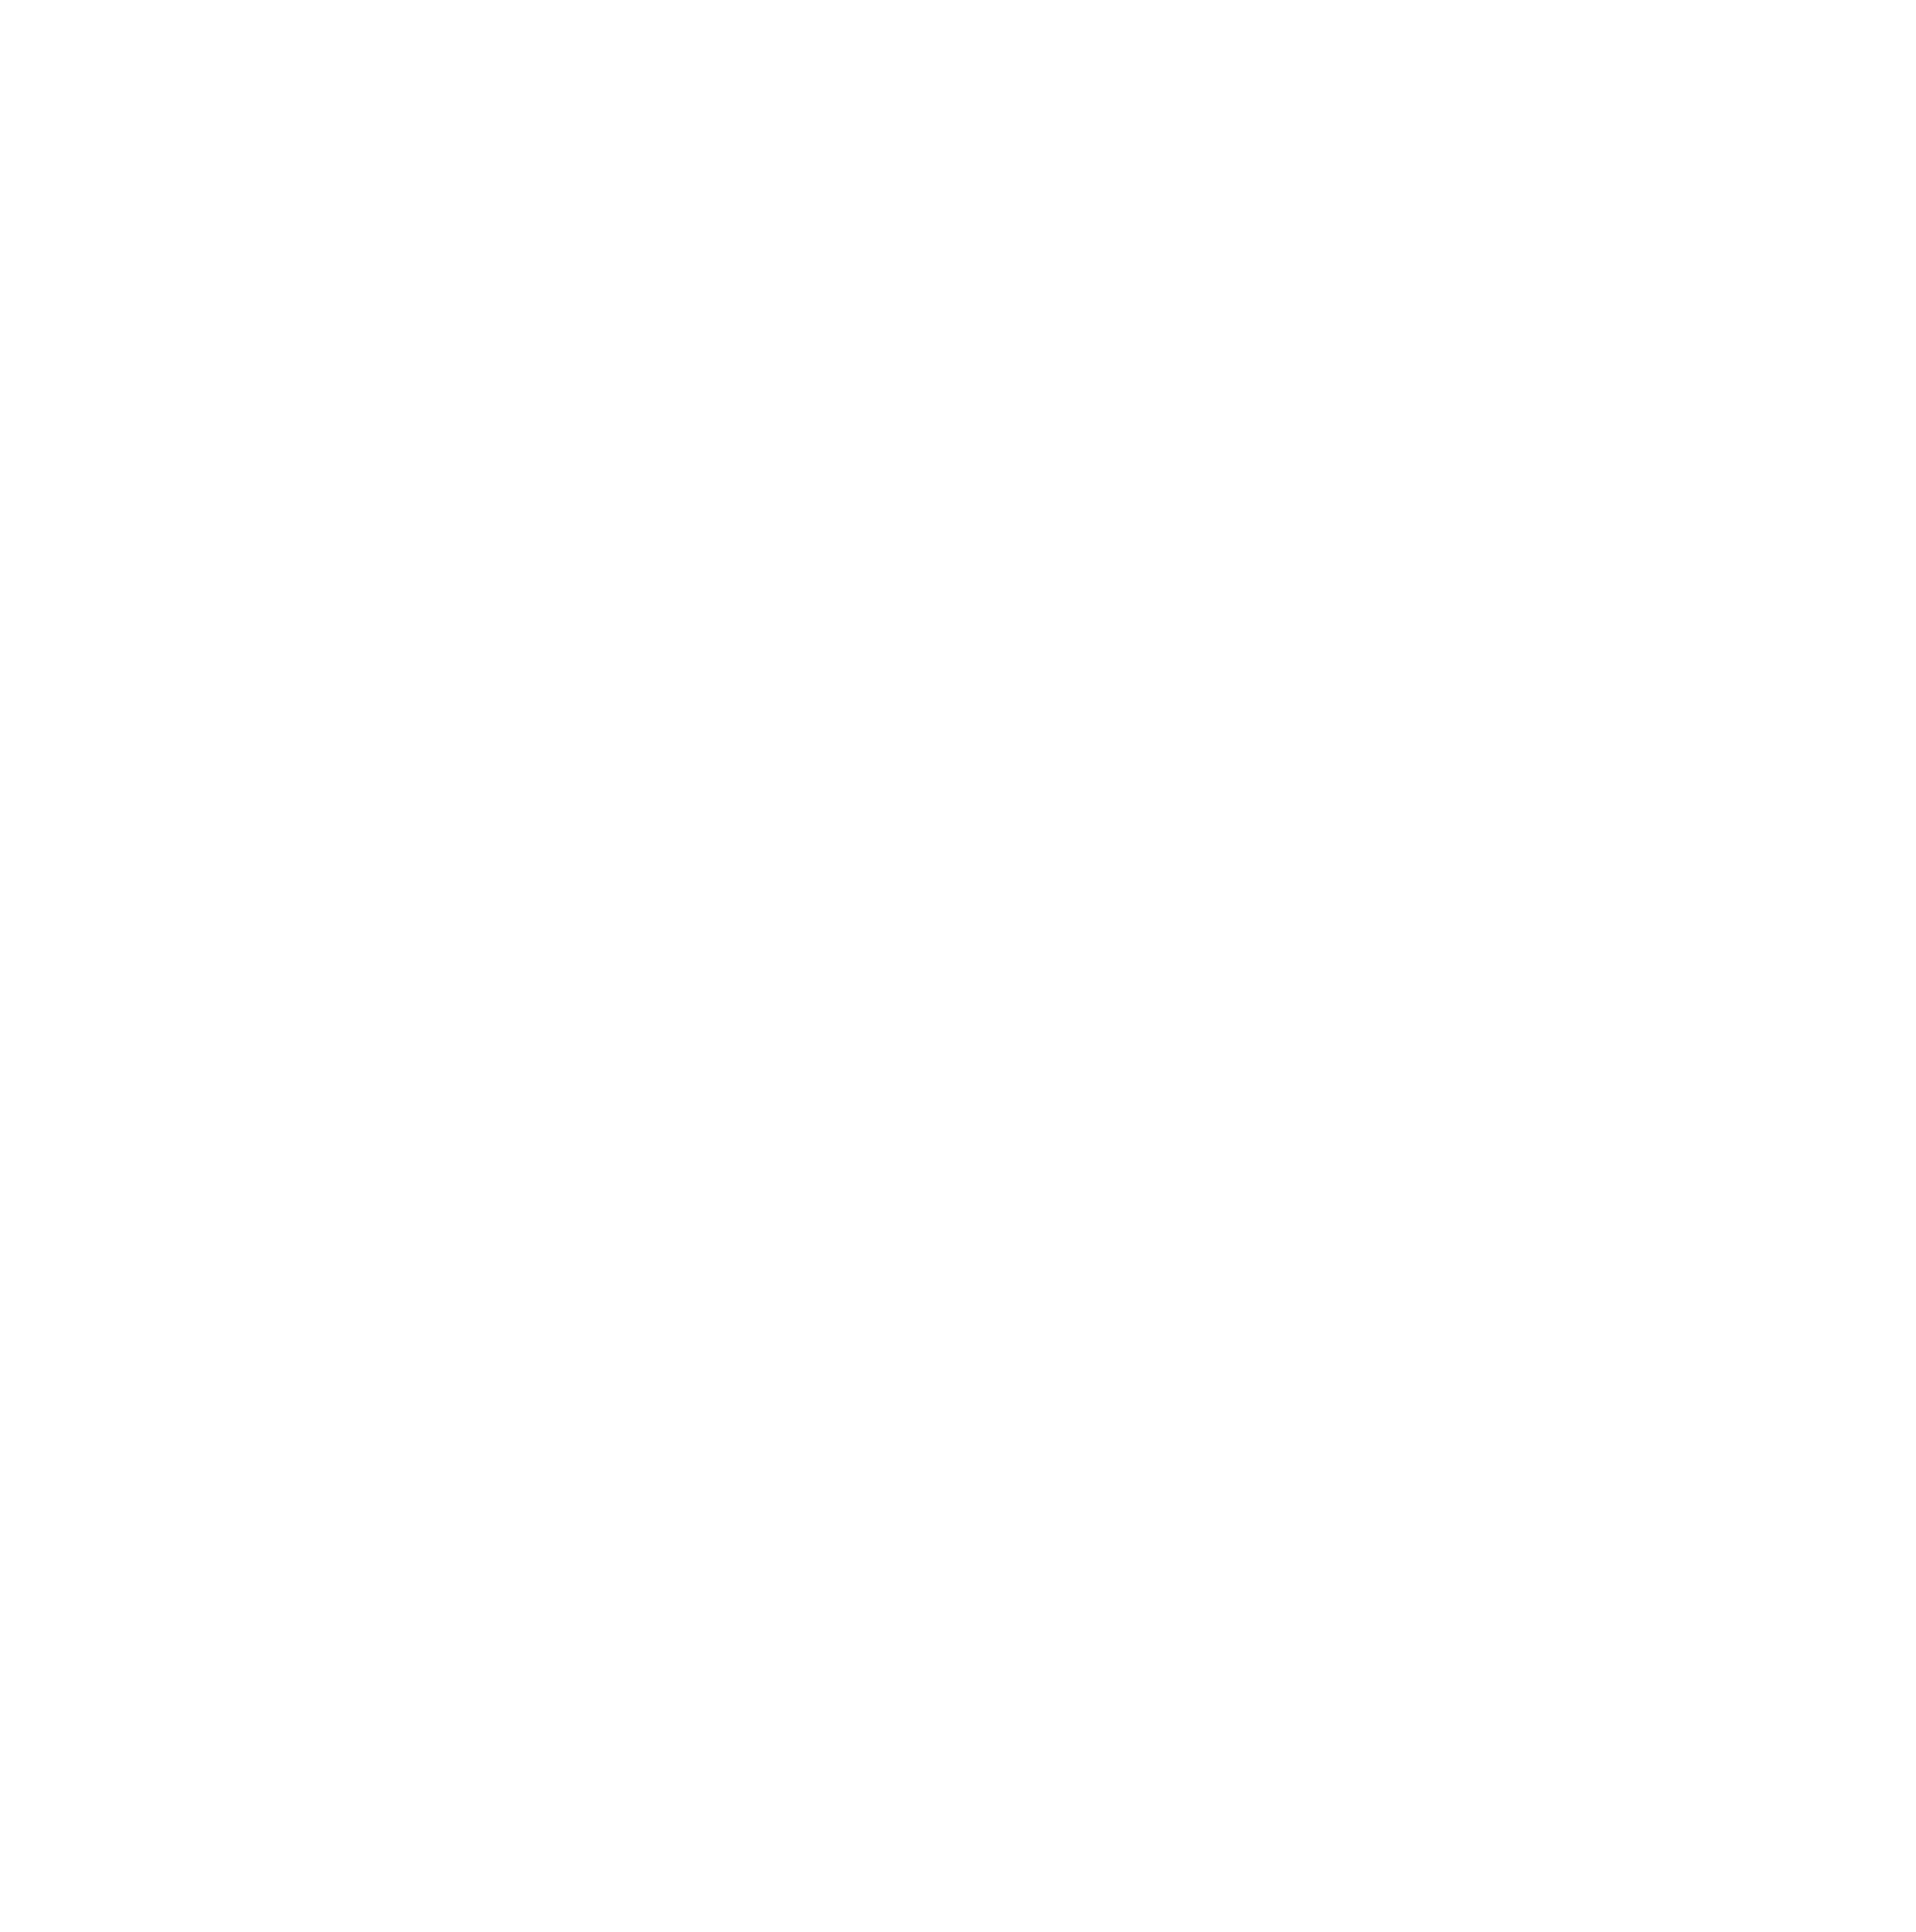 Chief Cornerstone Temple Court